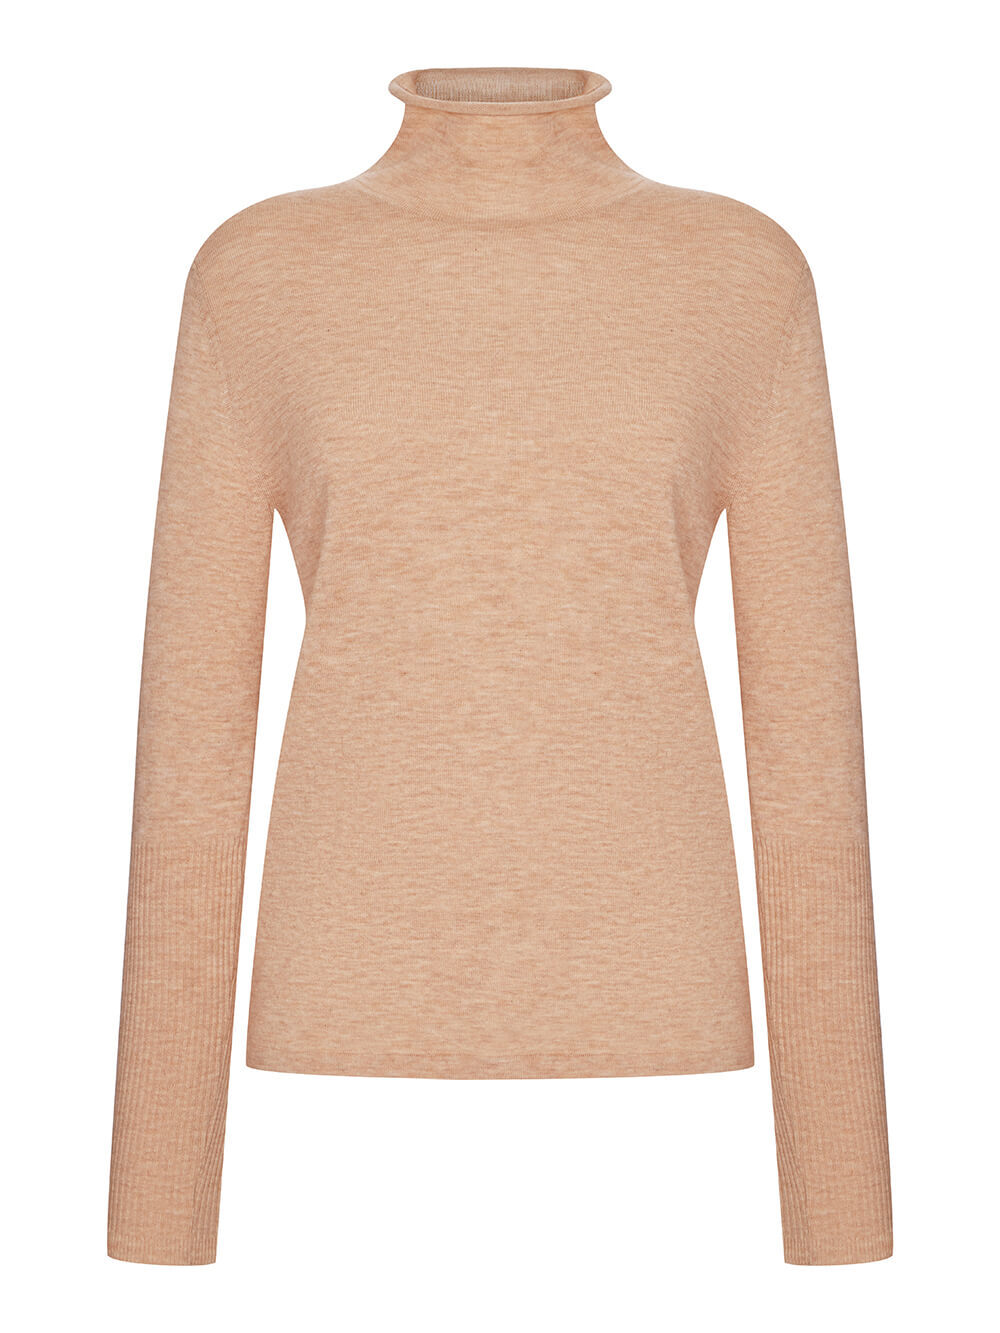 Женский свитер бежевого цвета из 100% шерсти - фото 1